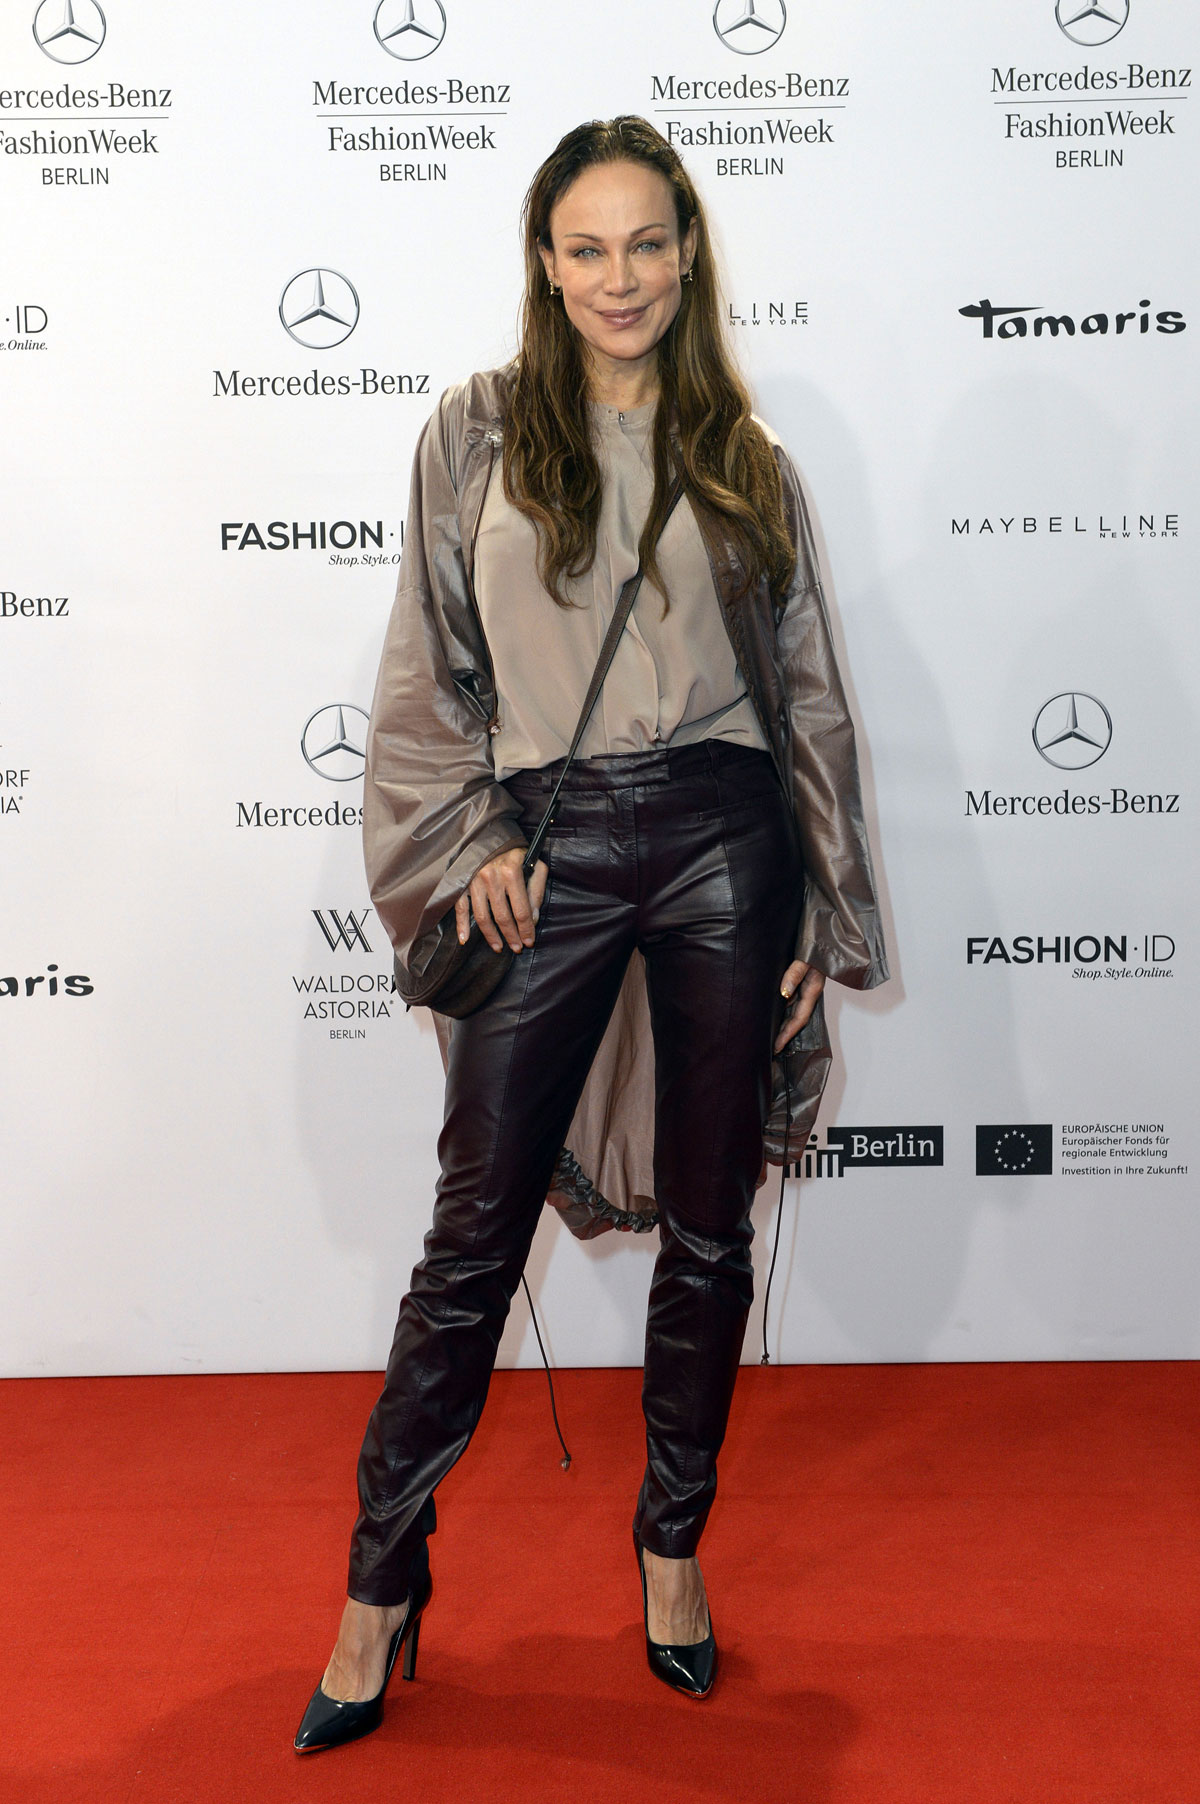 Other celebs attend Mercedes-Benz Fashion Week